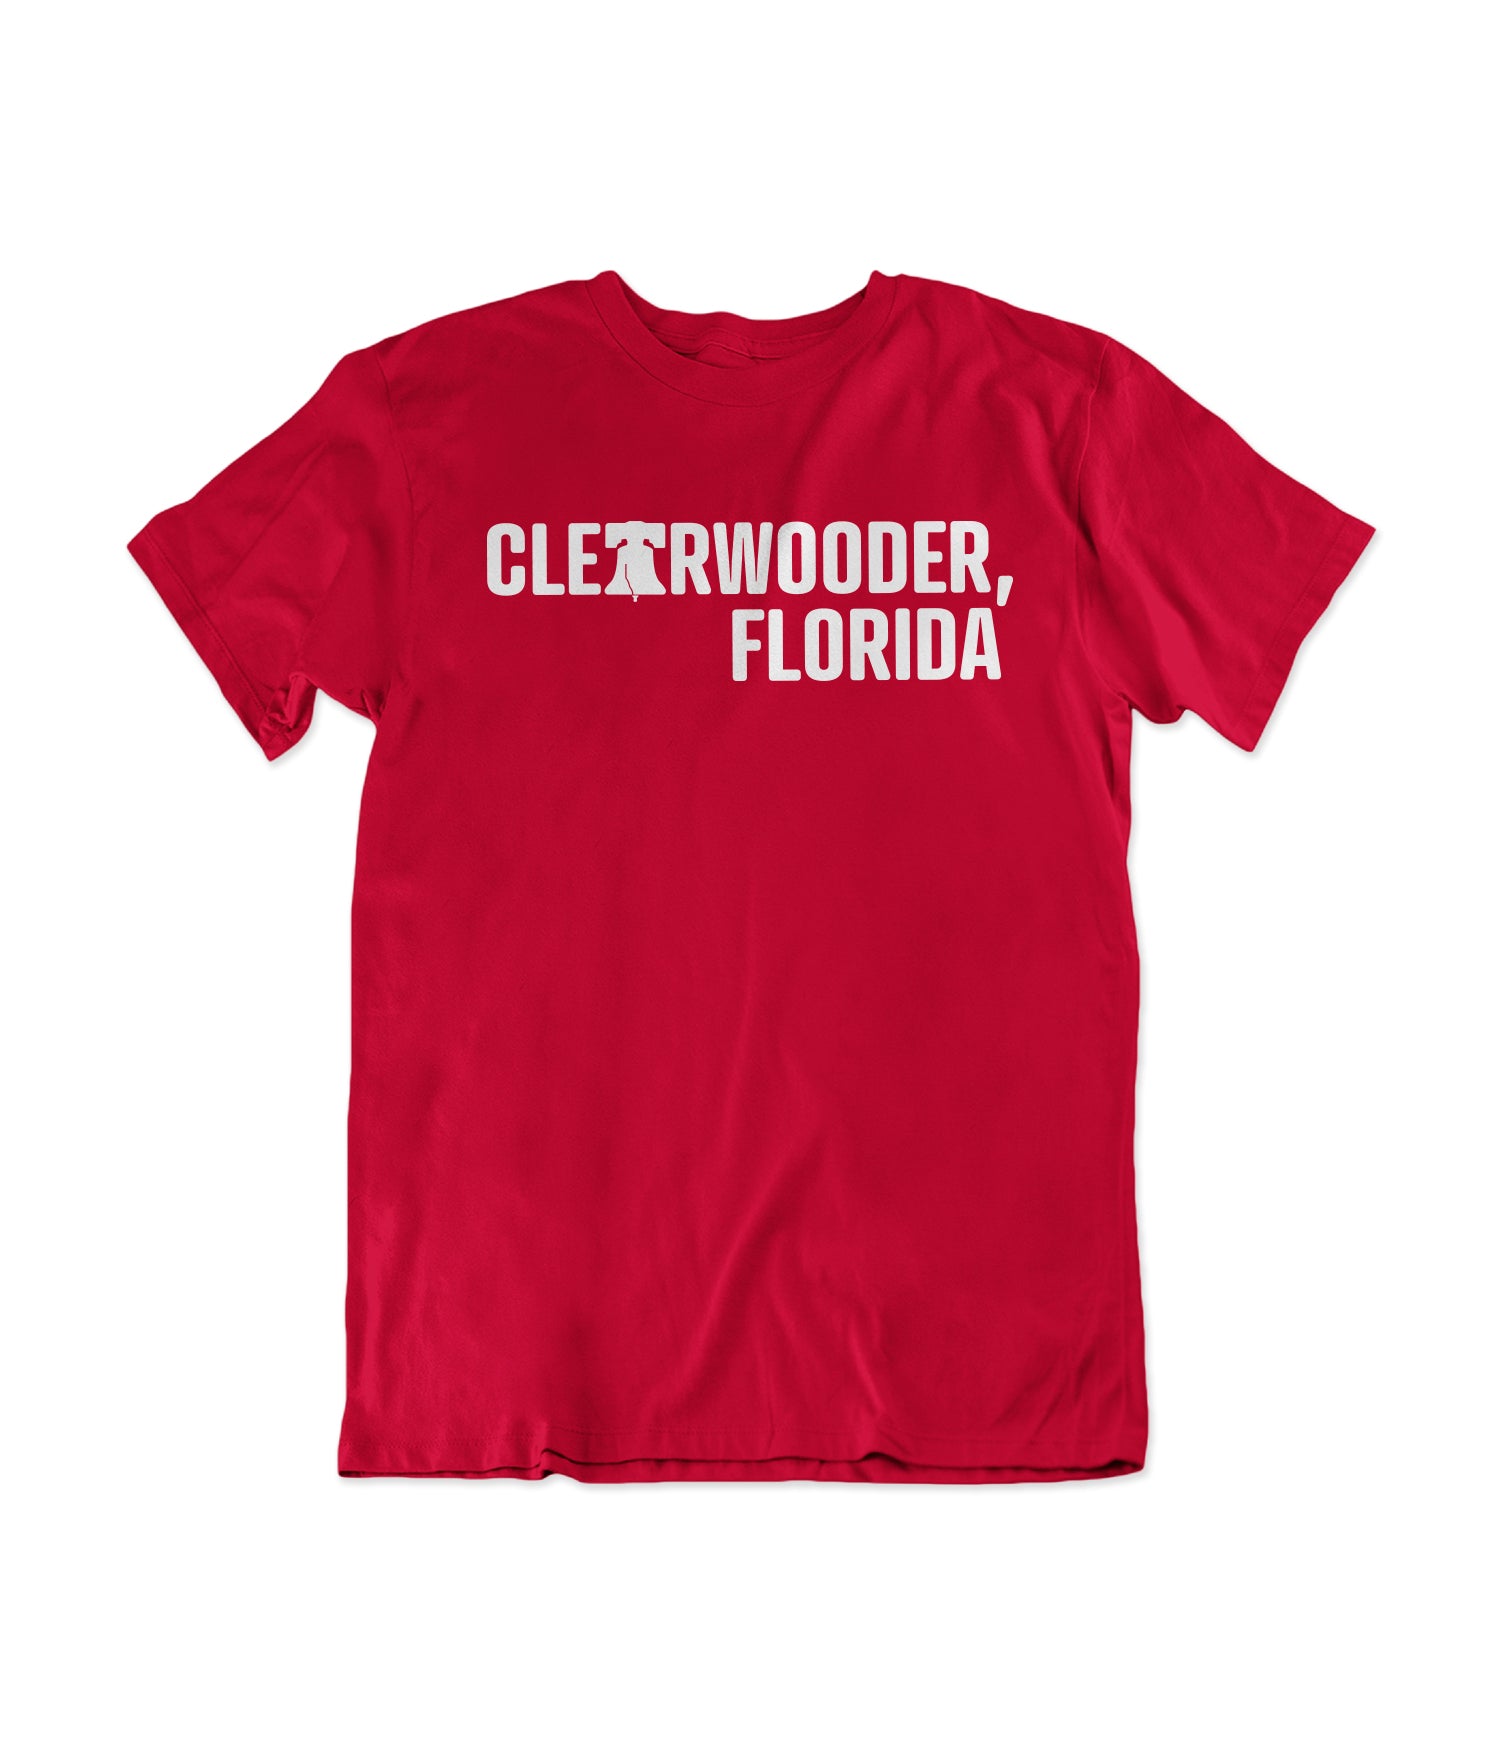 Clearwooder, Florida